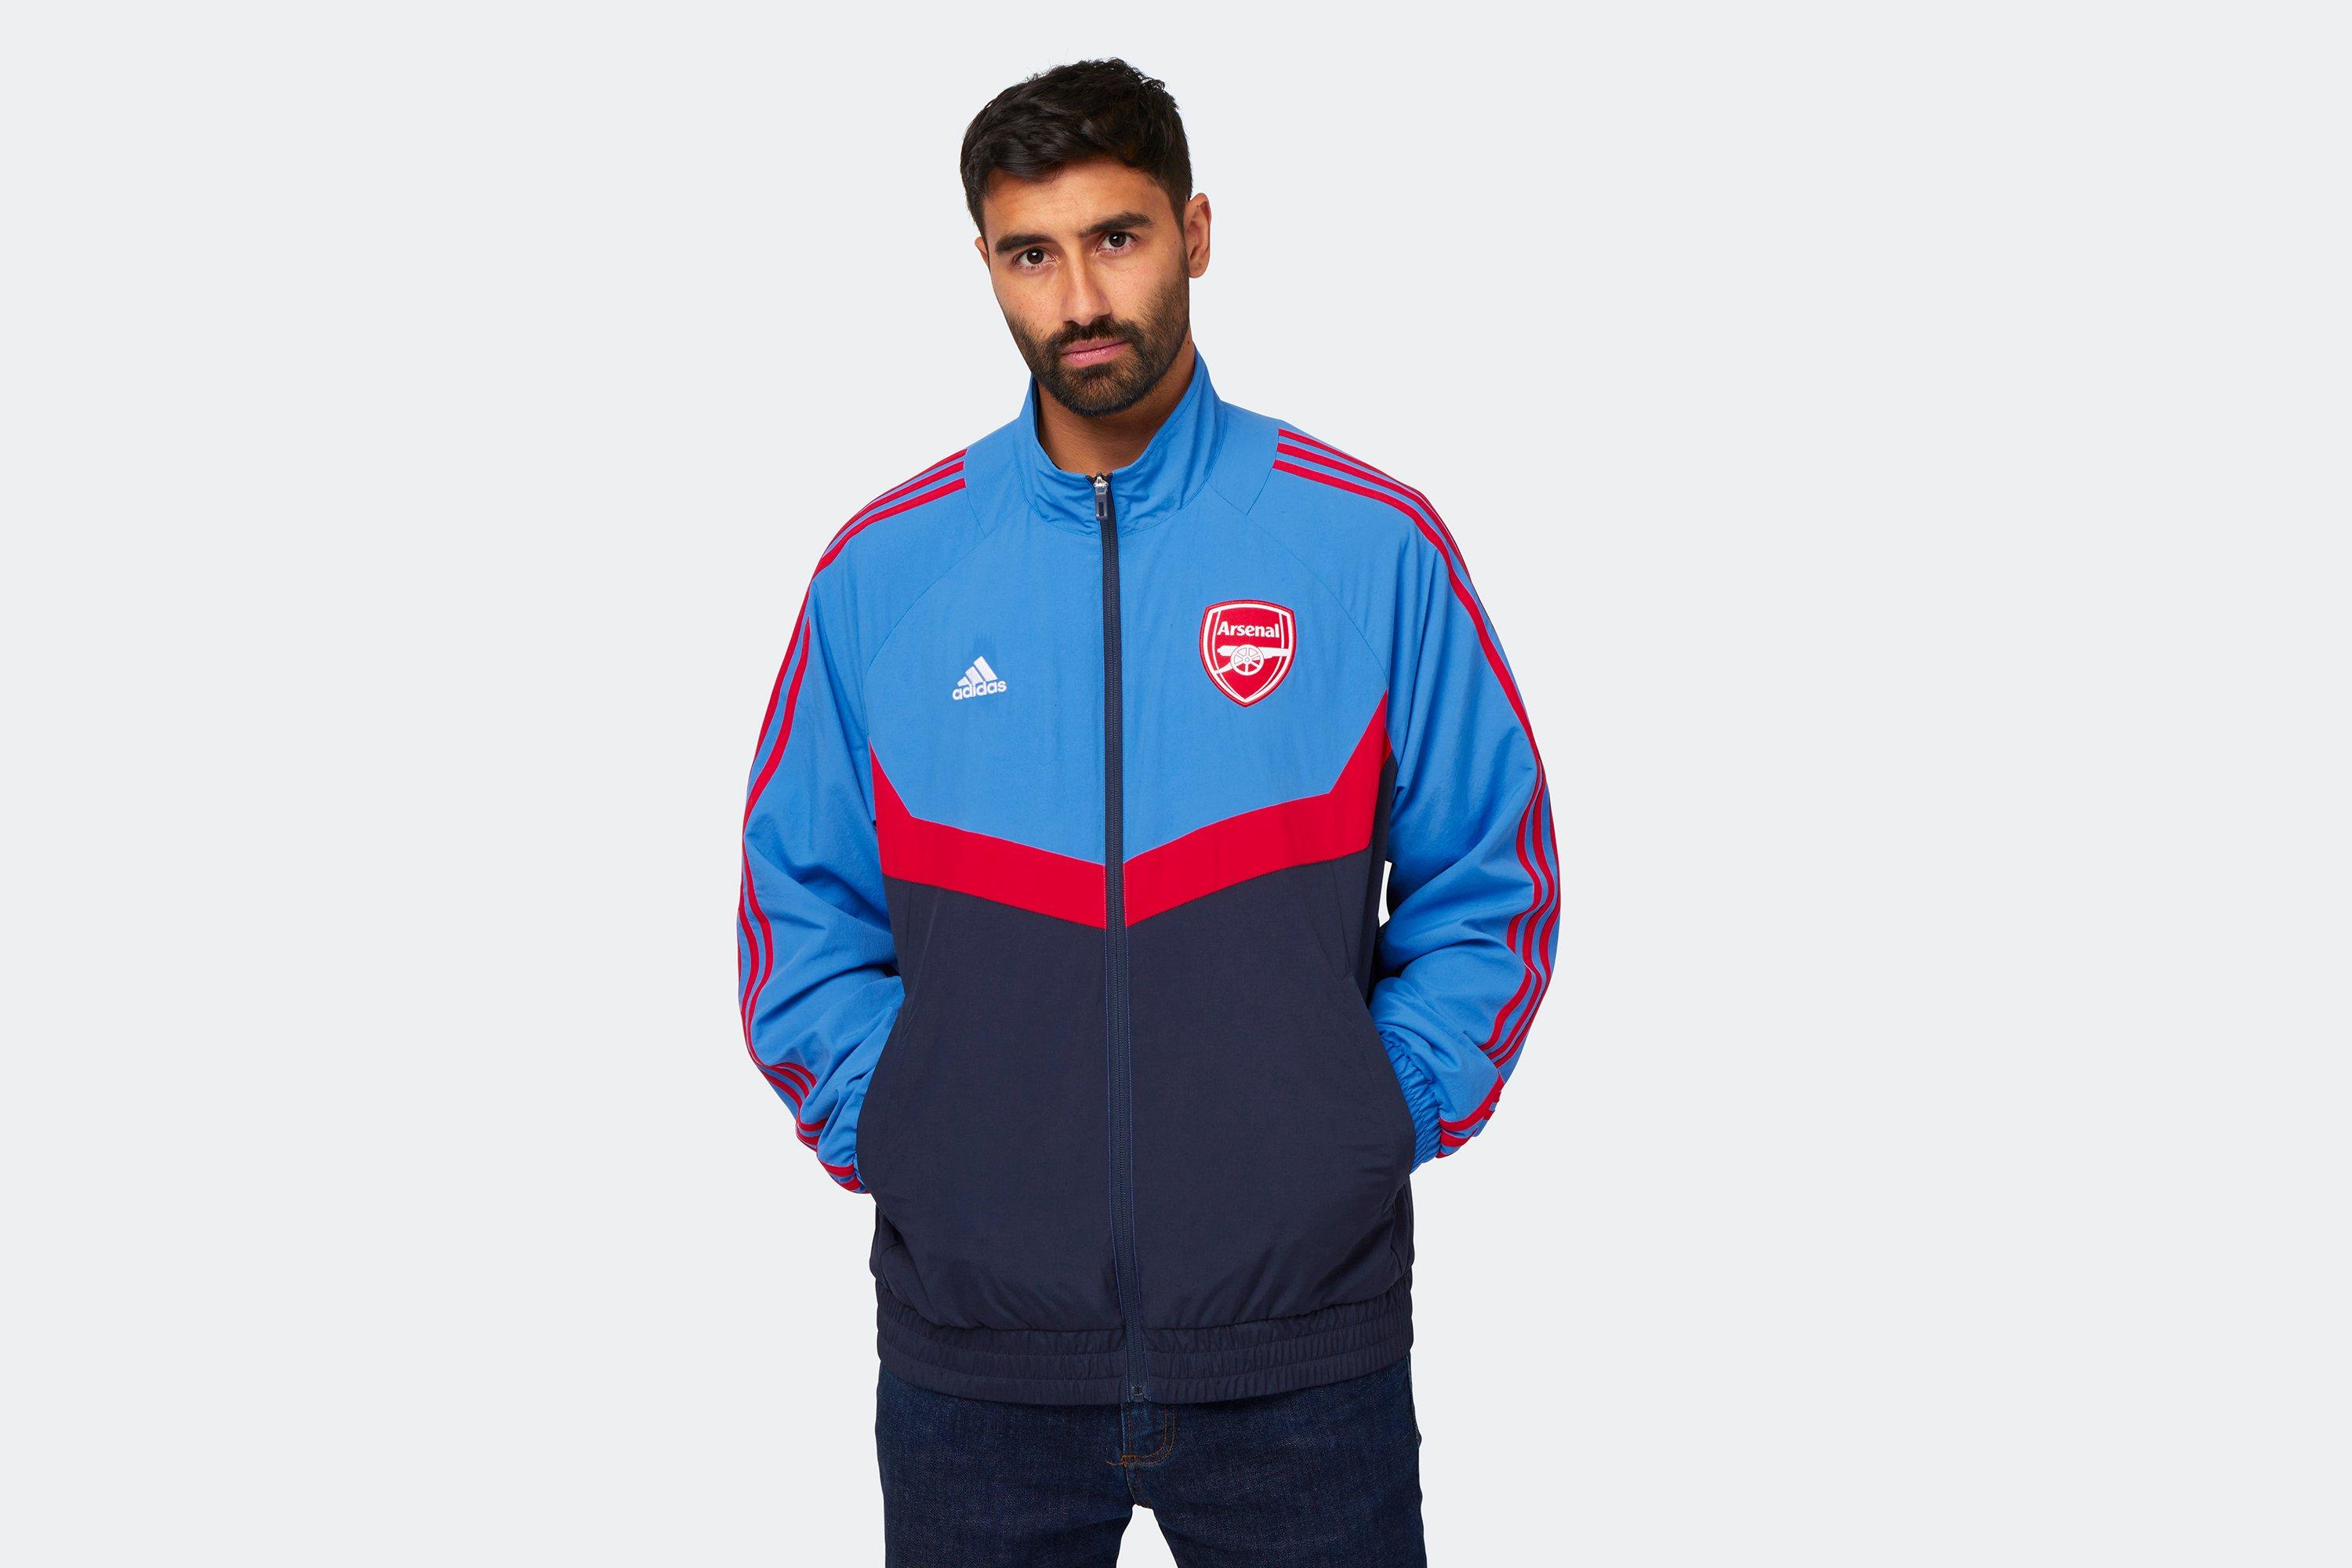 Arsenal Men's Jackets & Coats